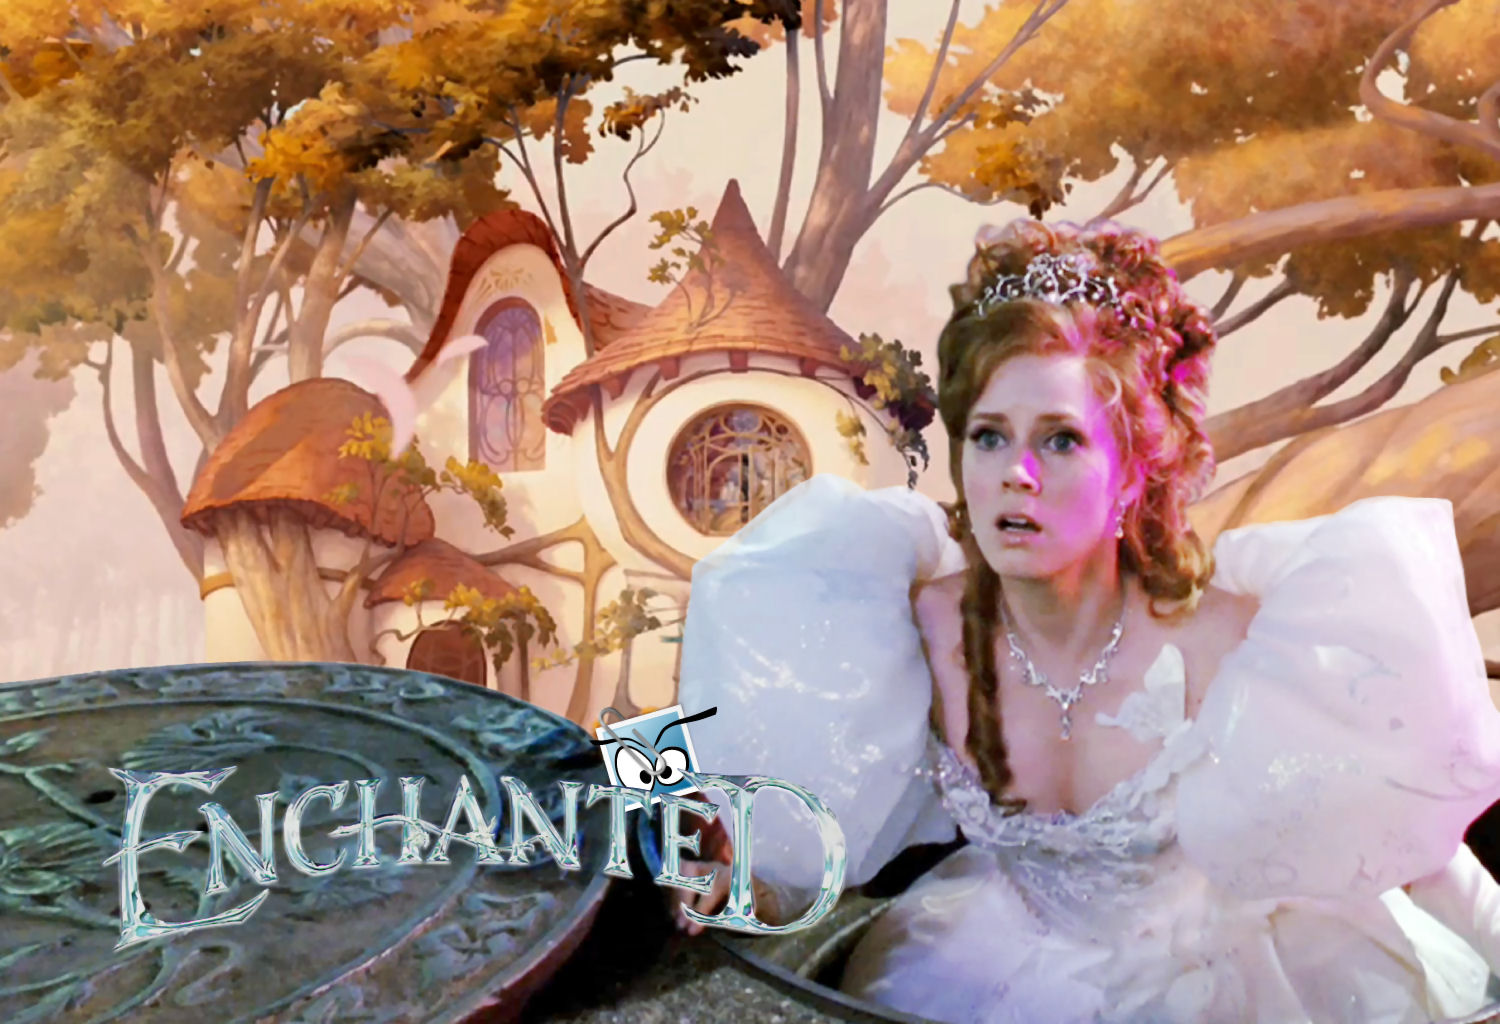 download wallpaper: Enchanted – Giselle wallpaper